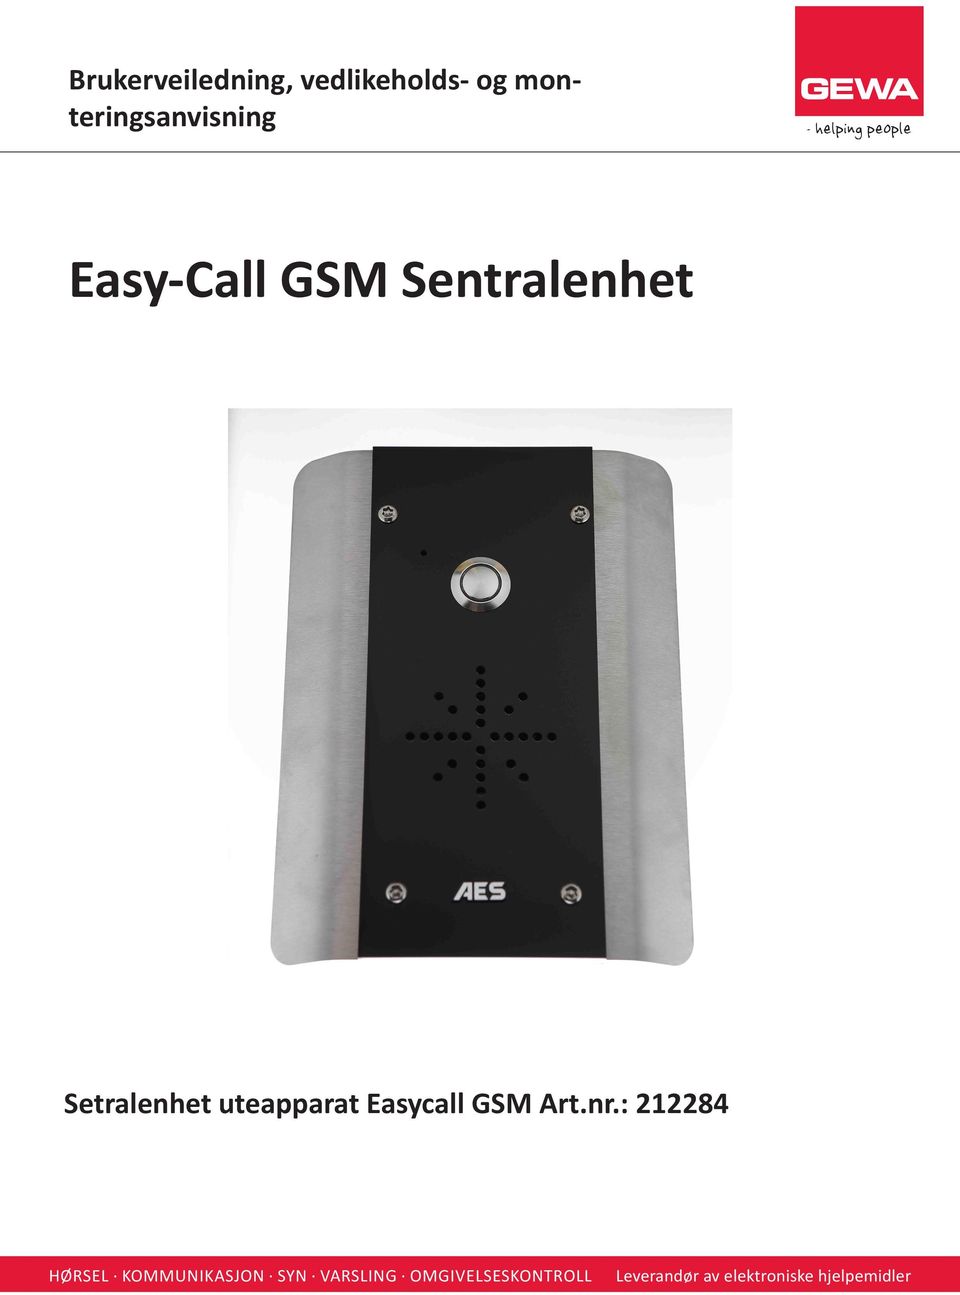 Easycall GSM Art.nr.